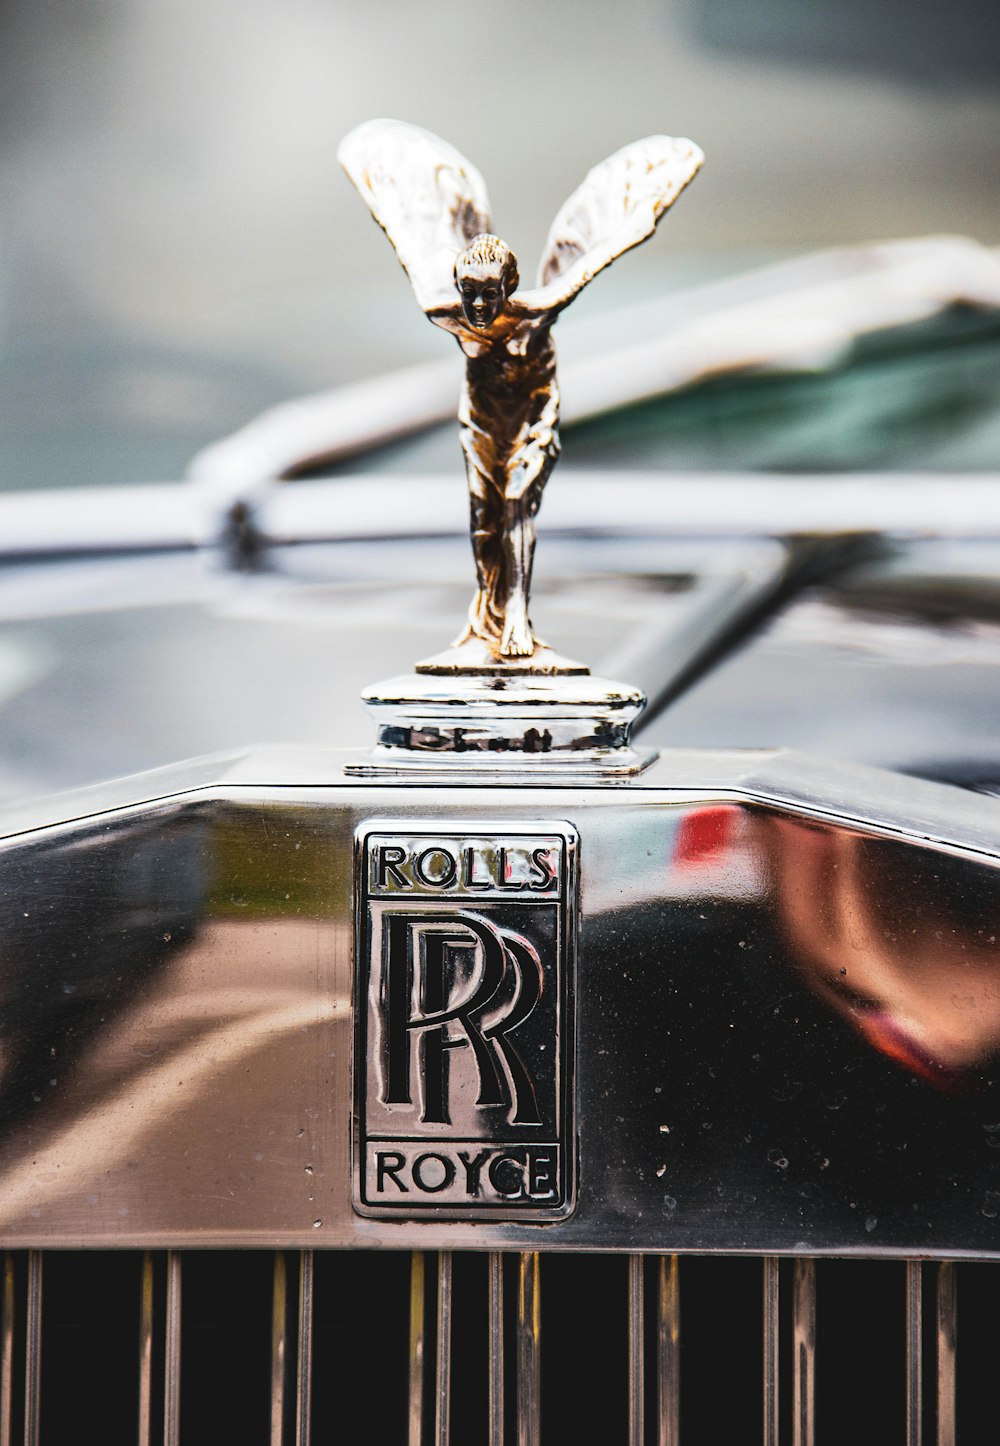 Image result for rolls royce logo"